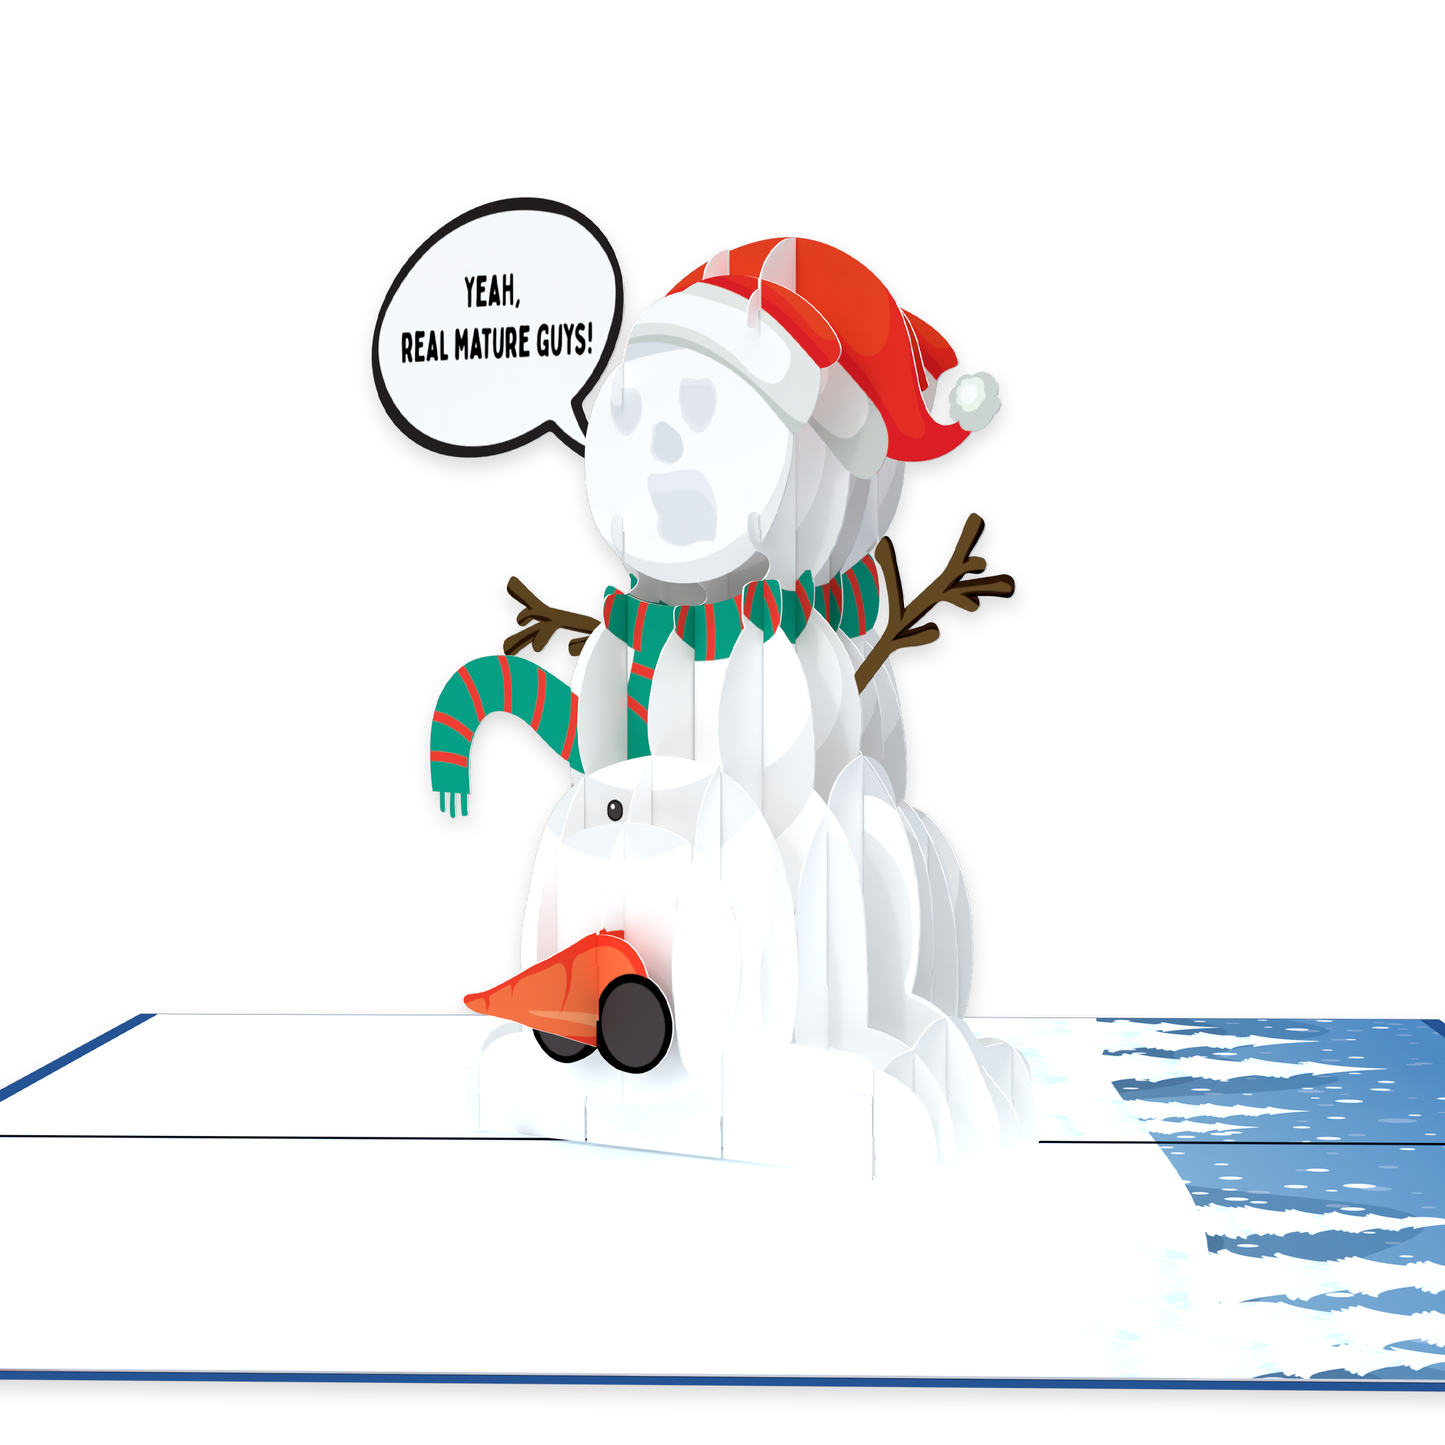 Mature Snowman Funny Christmas Card